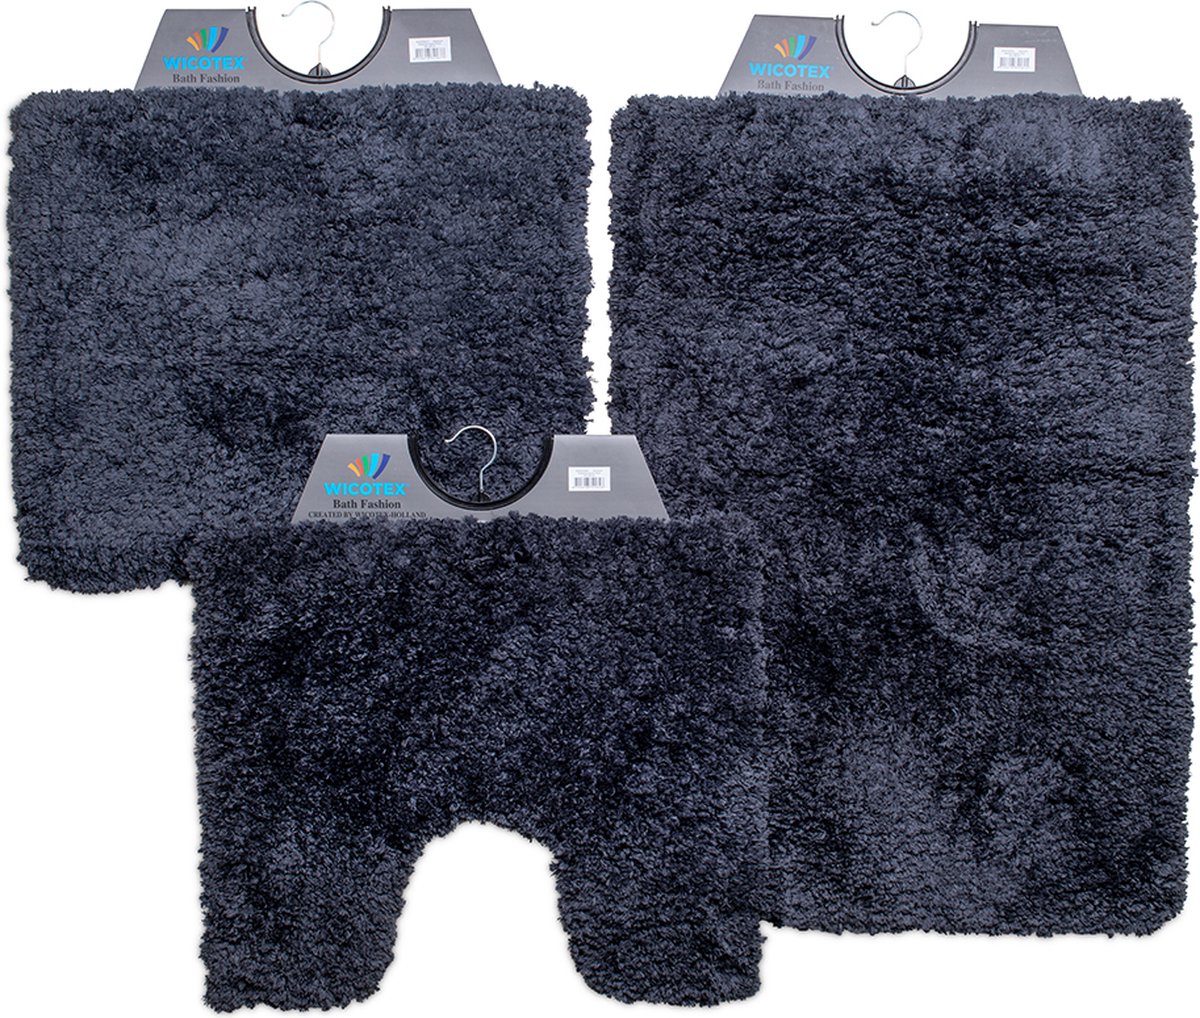 Wicotex - Badmat set - Badmat - Toiletmat - Bidetmat Pure Antraciet - Antislip onderkant - WC mat met uitsparing